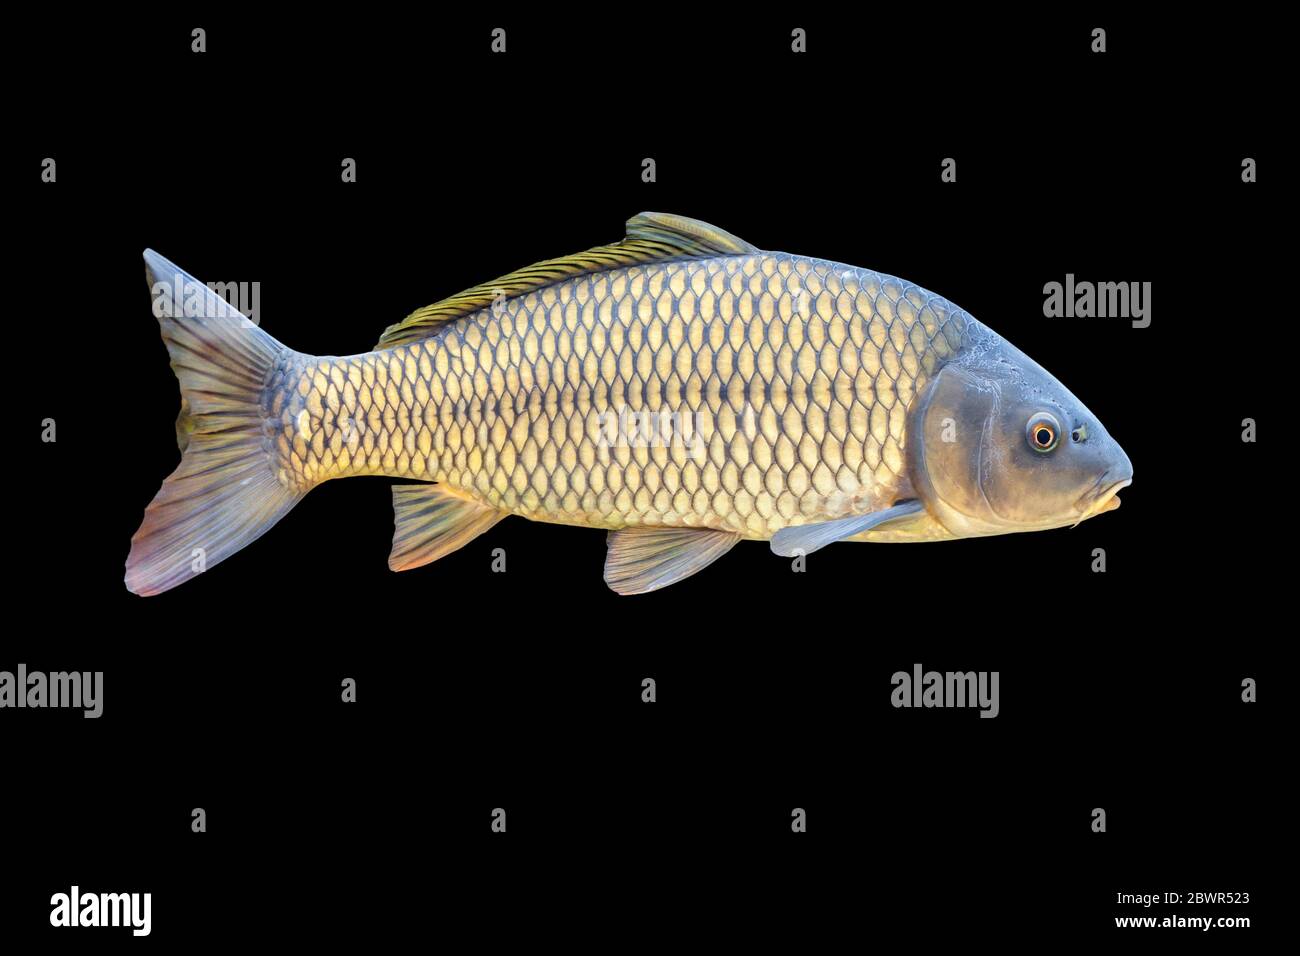 Carpa Europea o Cyprinus carpio, una especie de peces de agua dulce. Aislado sobre negro. Foto de stock